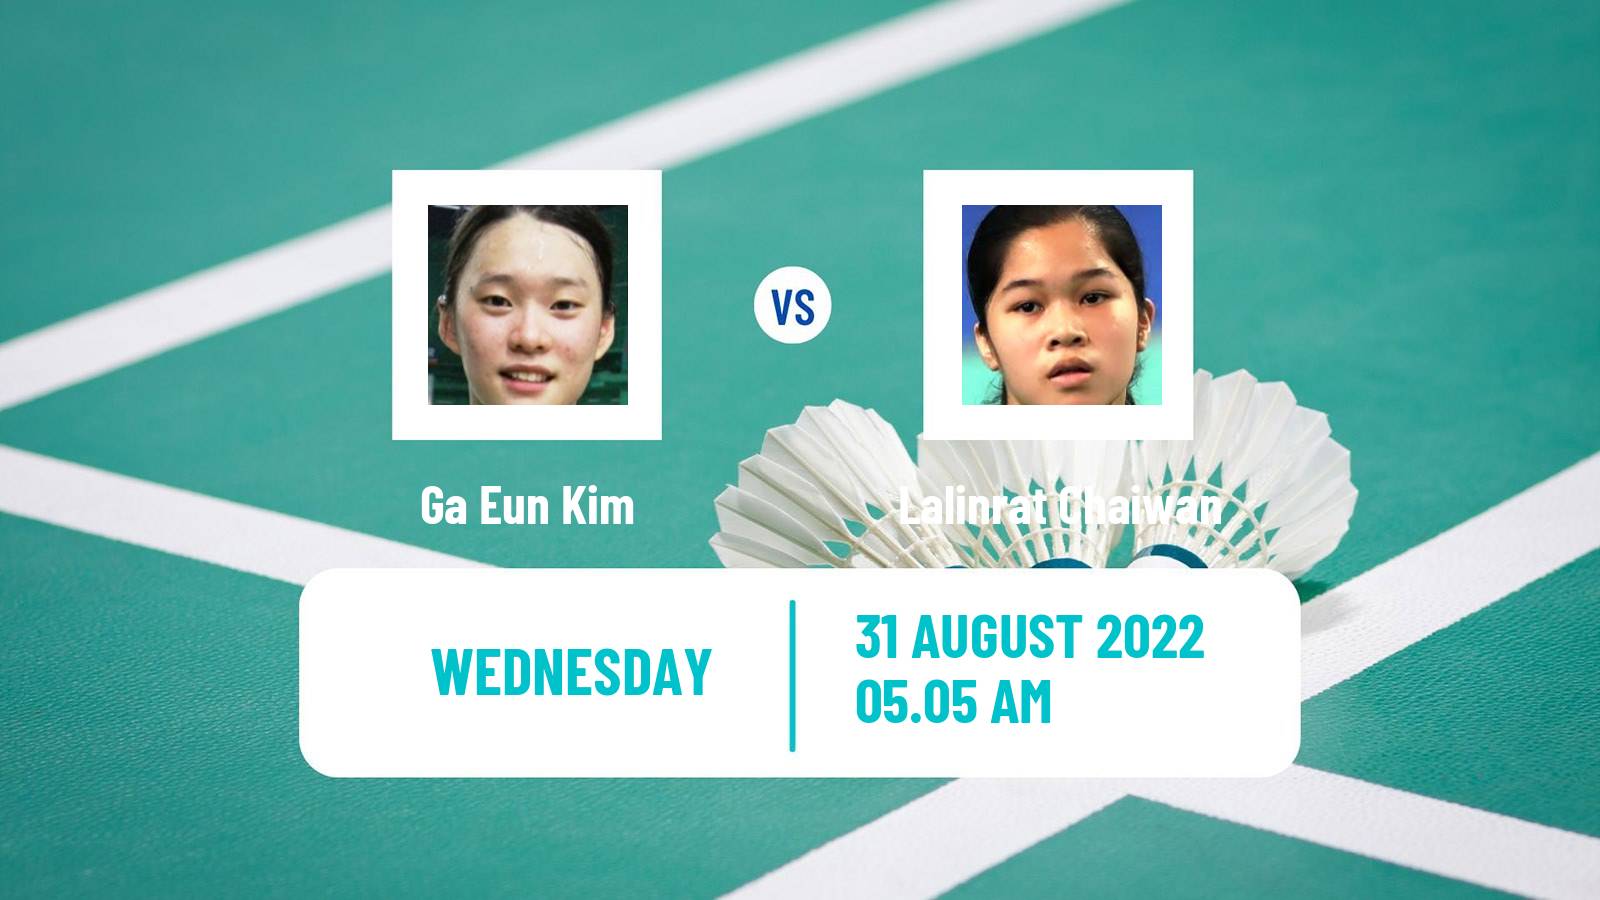 Badminton Badminton Ga Eun Kim - Lalinrat Chaiwan